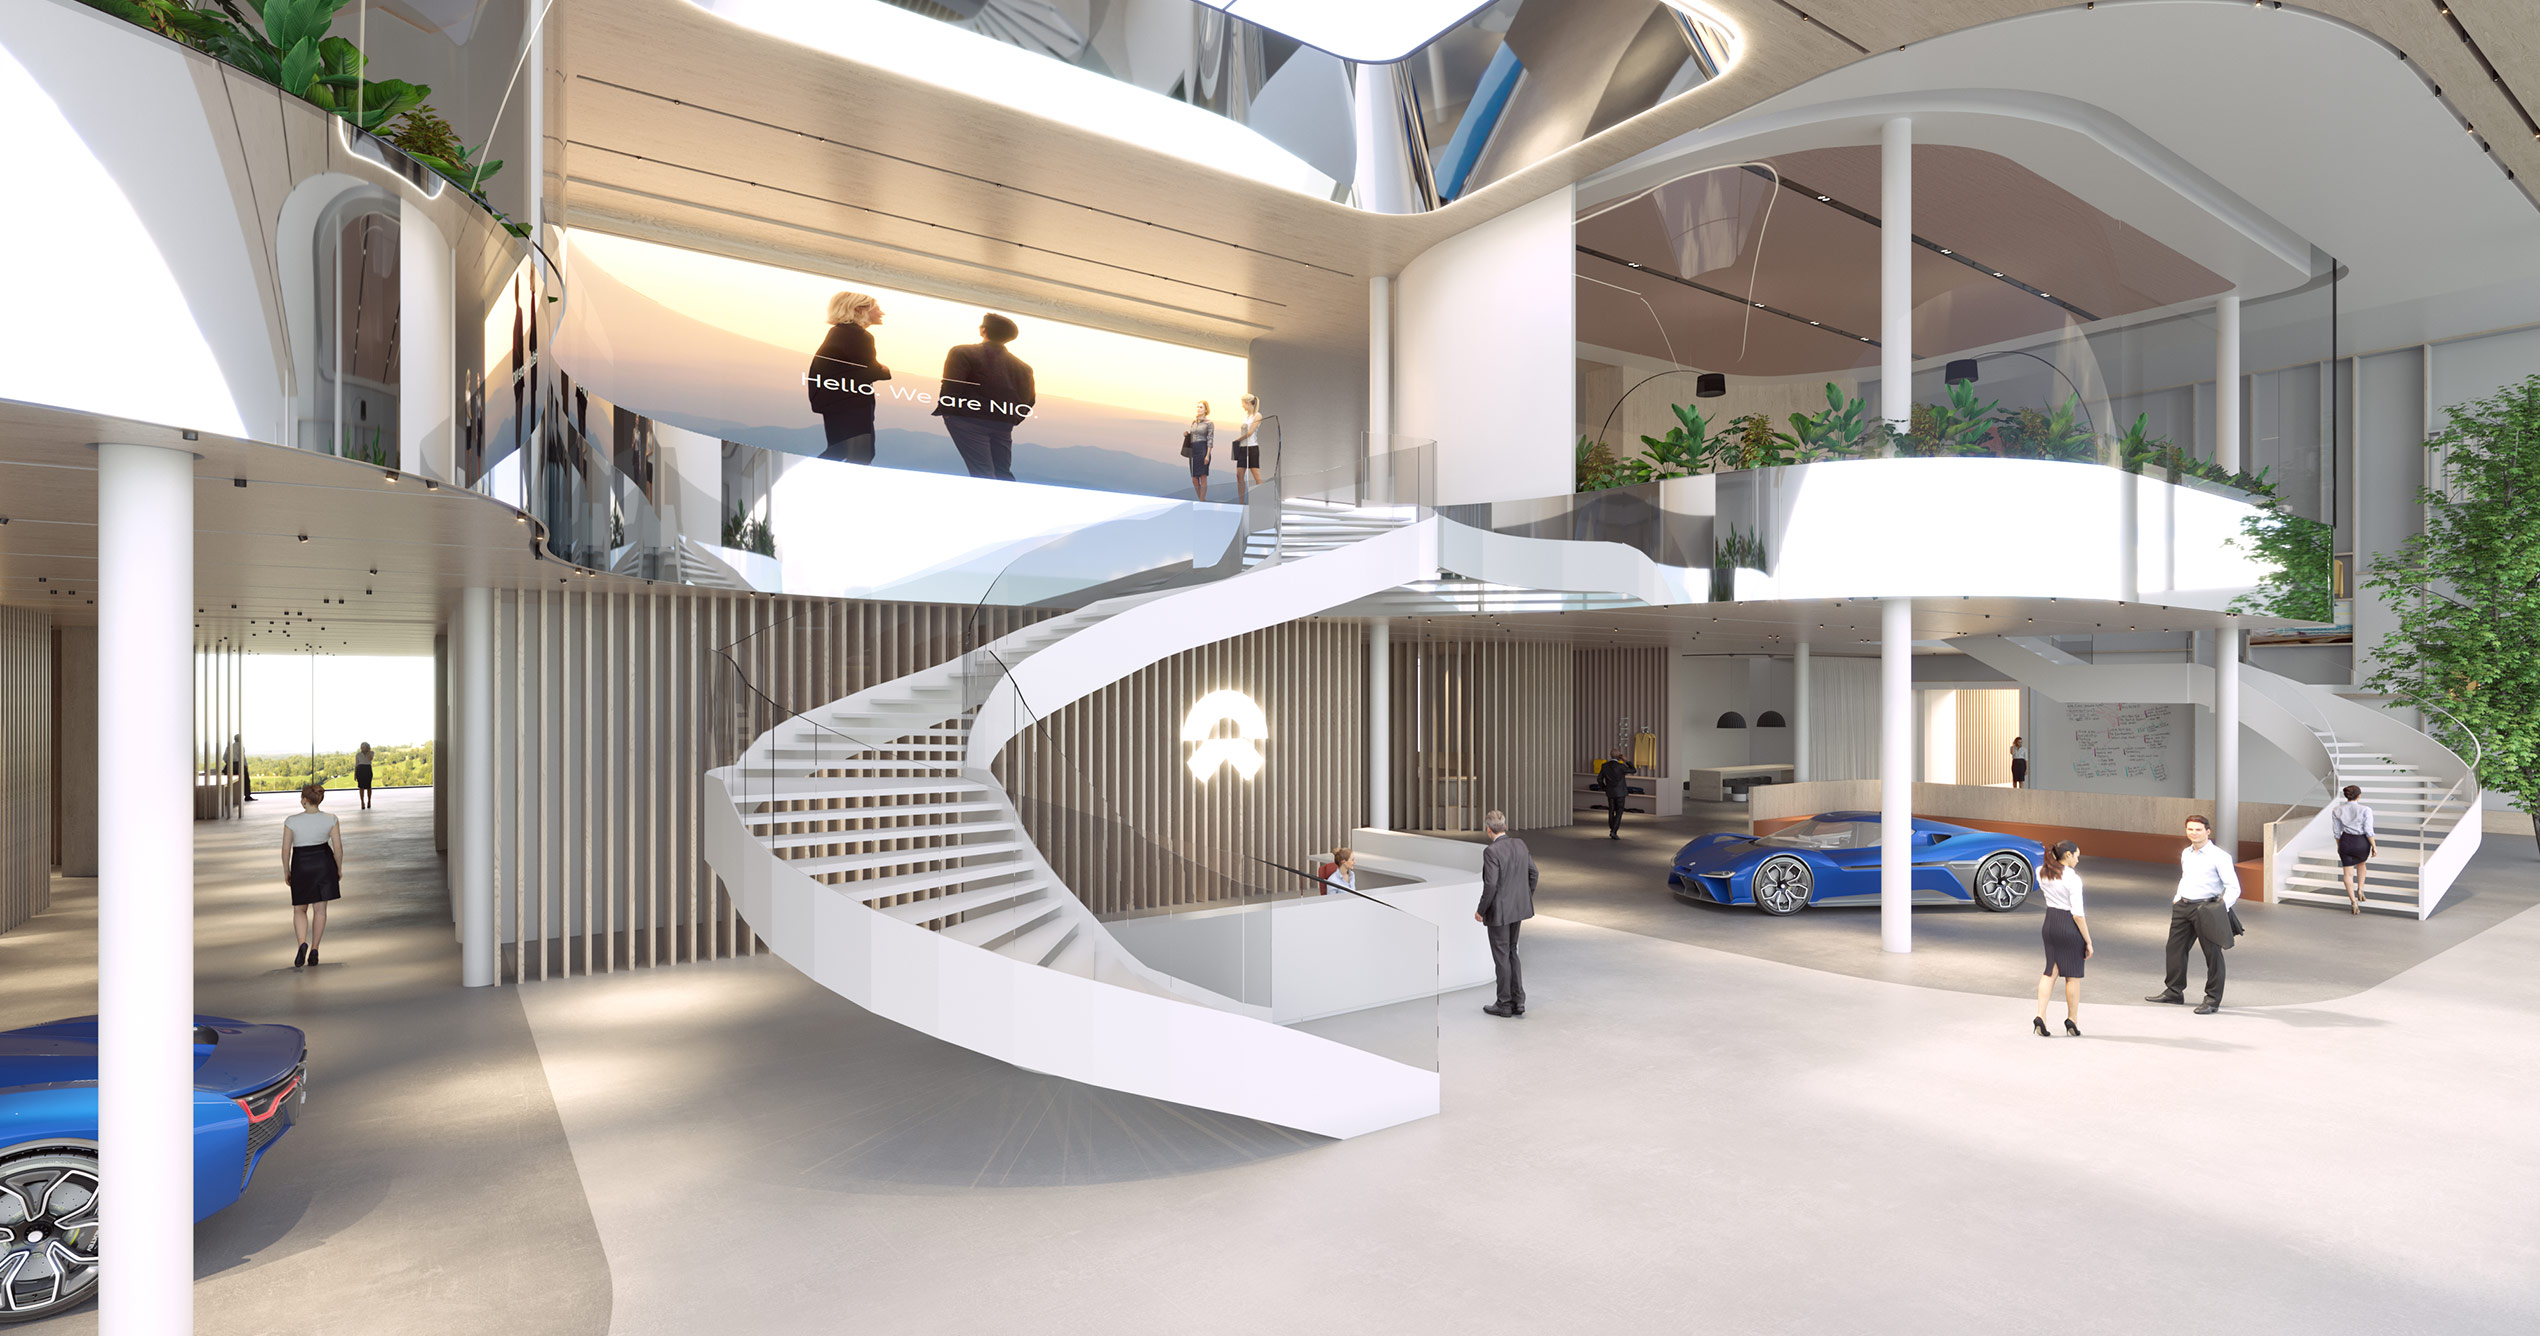 NIO Electric Vehicles Showroom Commercial Property Development Interior Designer CGI Concept Visual by Unit4, London